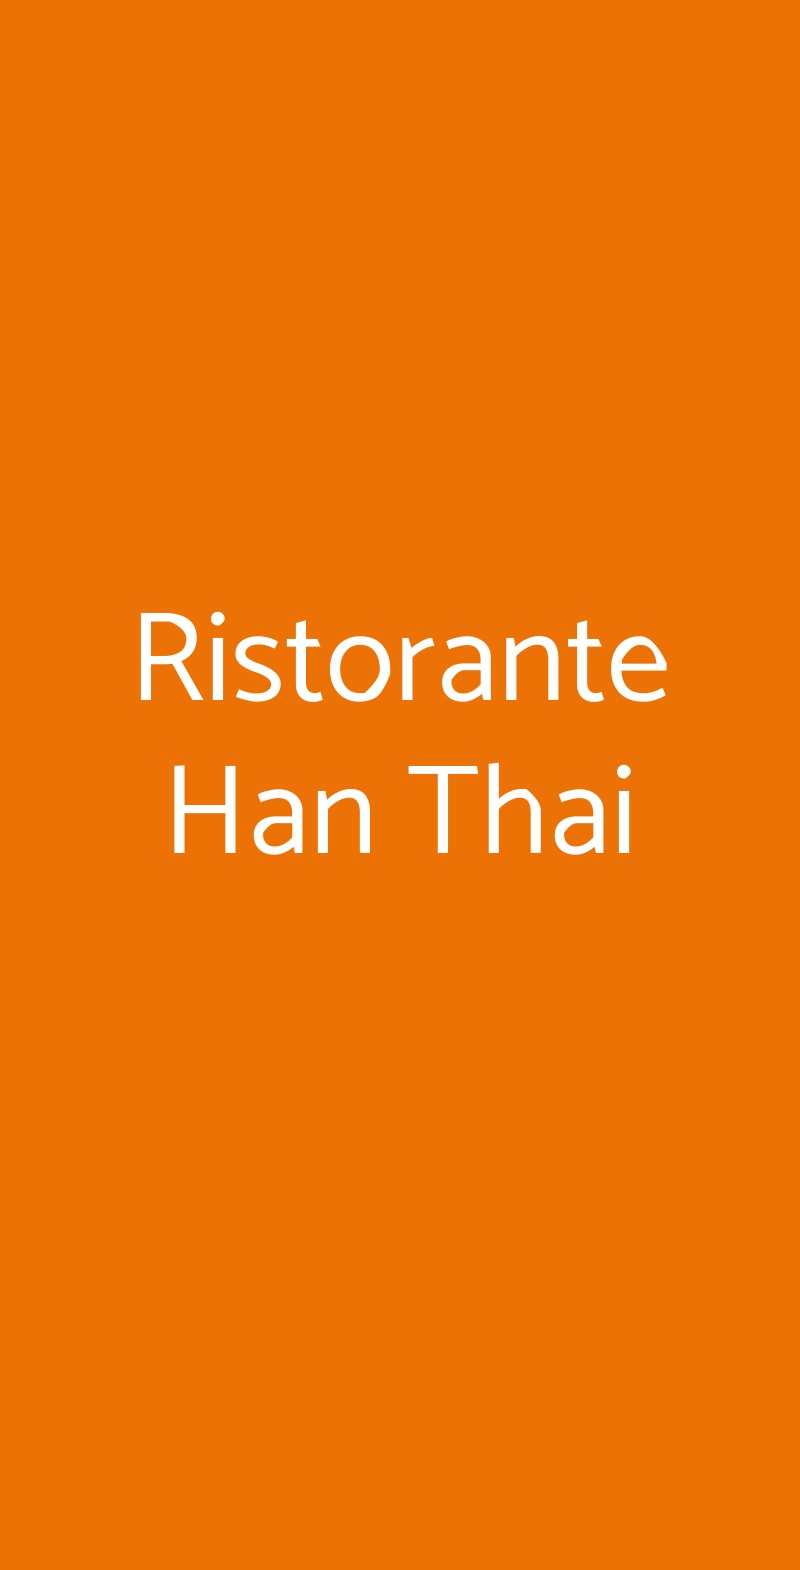 Ristorante Han Thai Roma menù 1 pagina